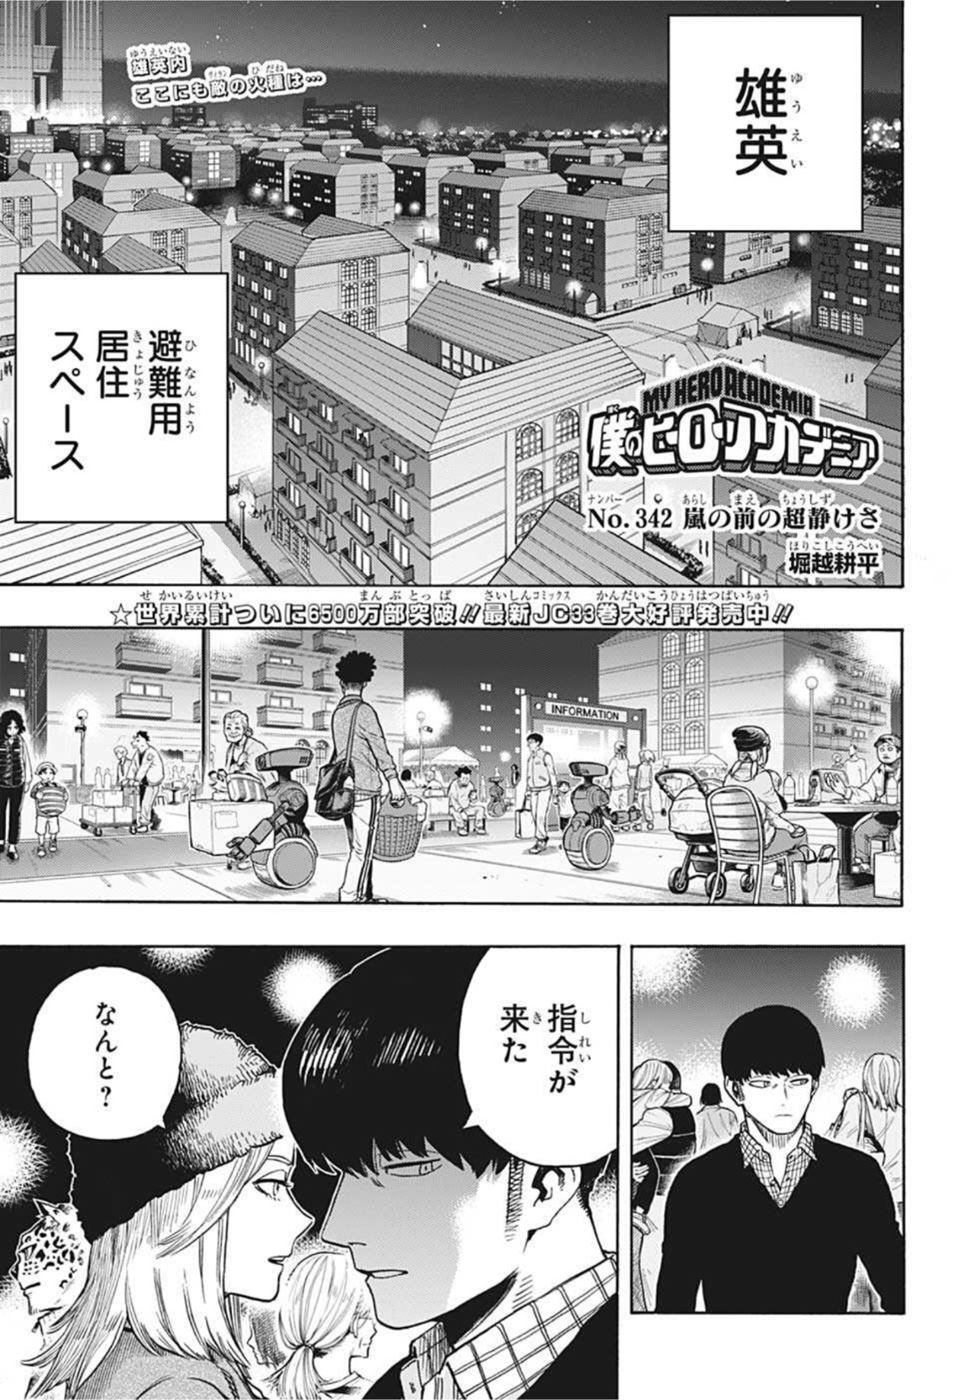 Boku no Hero Academia - Chapter 342 - Page 1